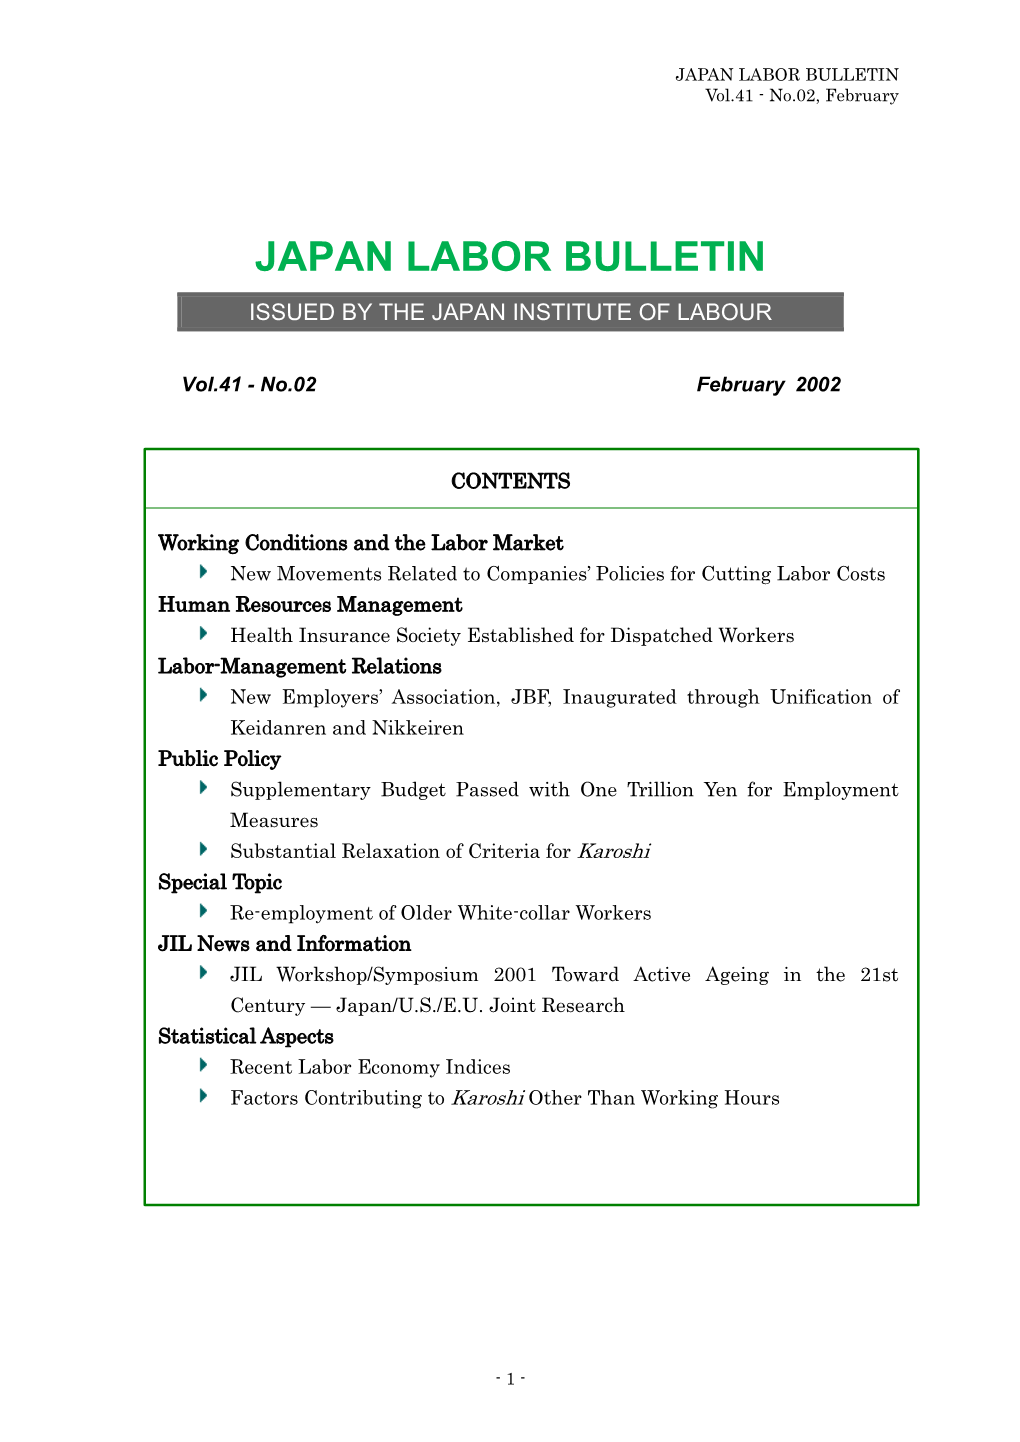 JAPAN LABOR BULLETIN Vol.41 - No.02, February